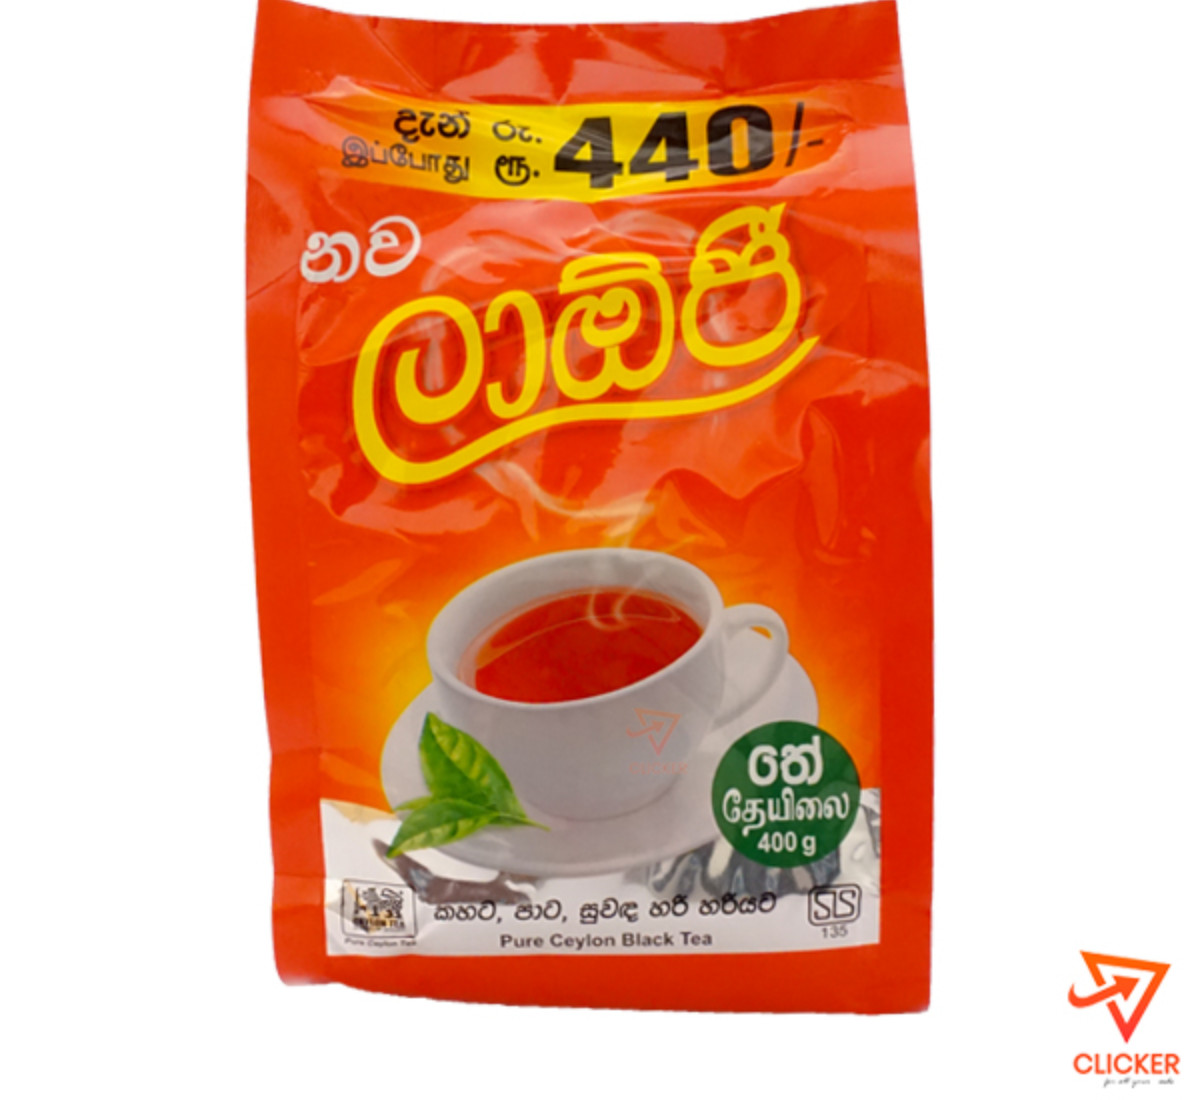 Clicker product 400g LAOJEE Tea 945